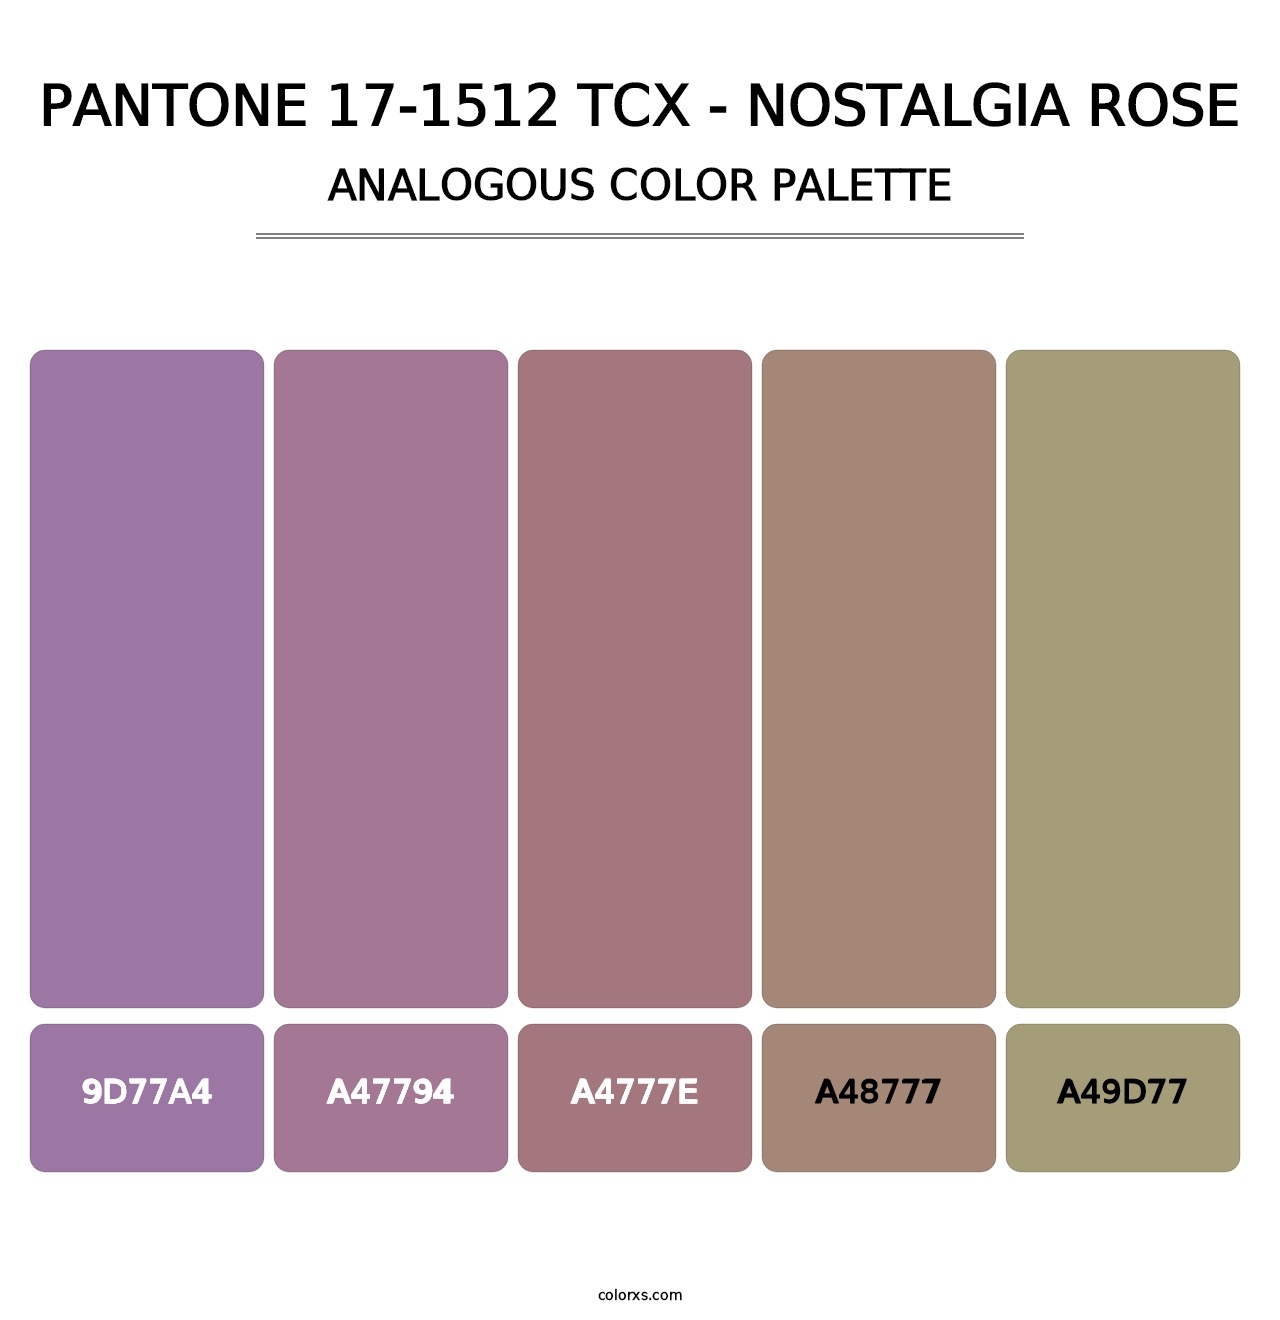 PANTONE 17-1512 TCX - Nostalgia Rose - Analogous Color Palette